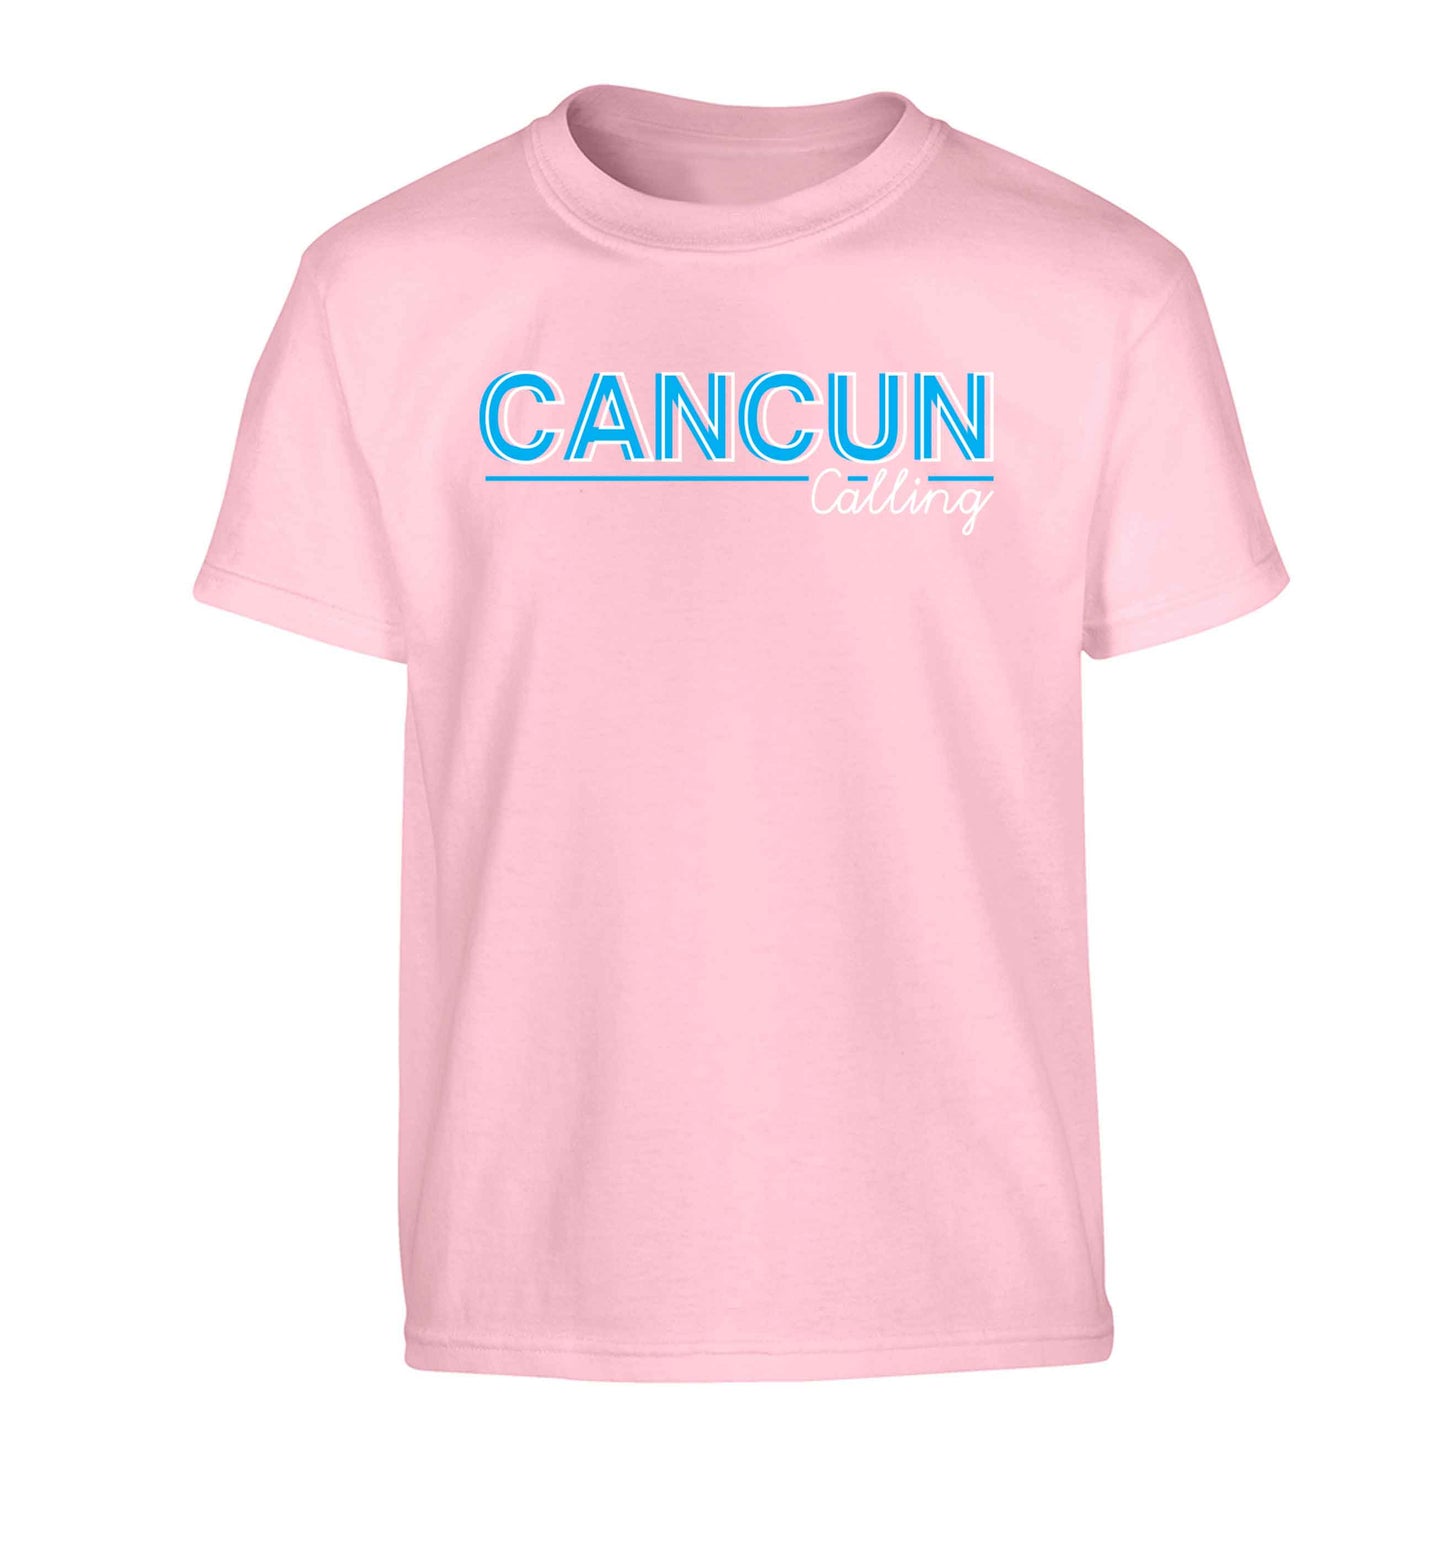 Cancun calling Children's light pink Tshirt 12-13 Years